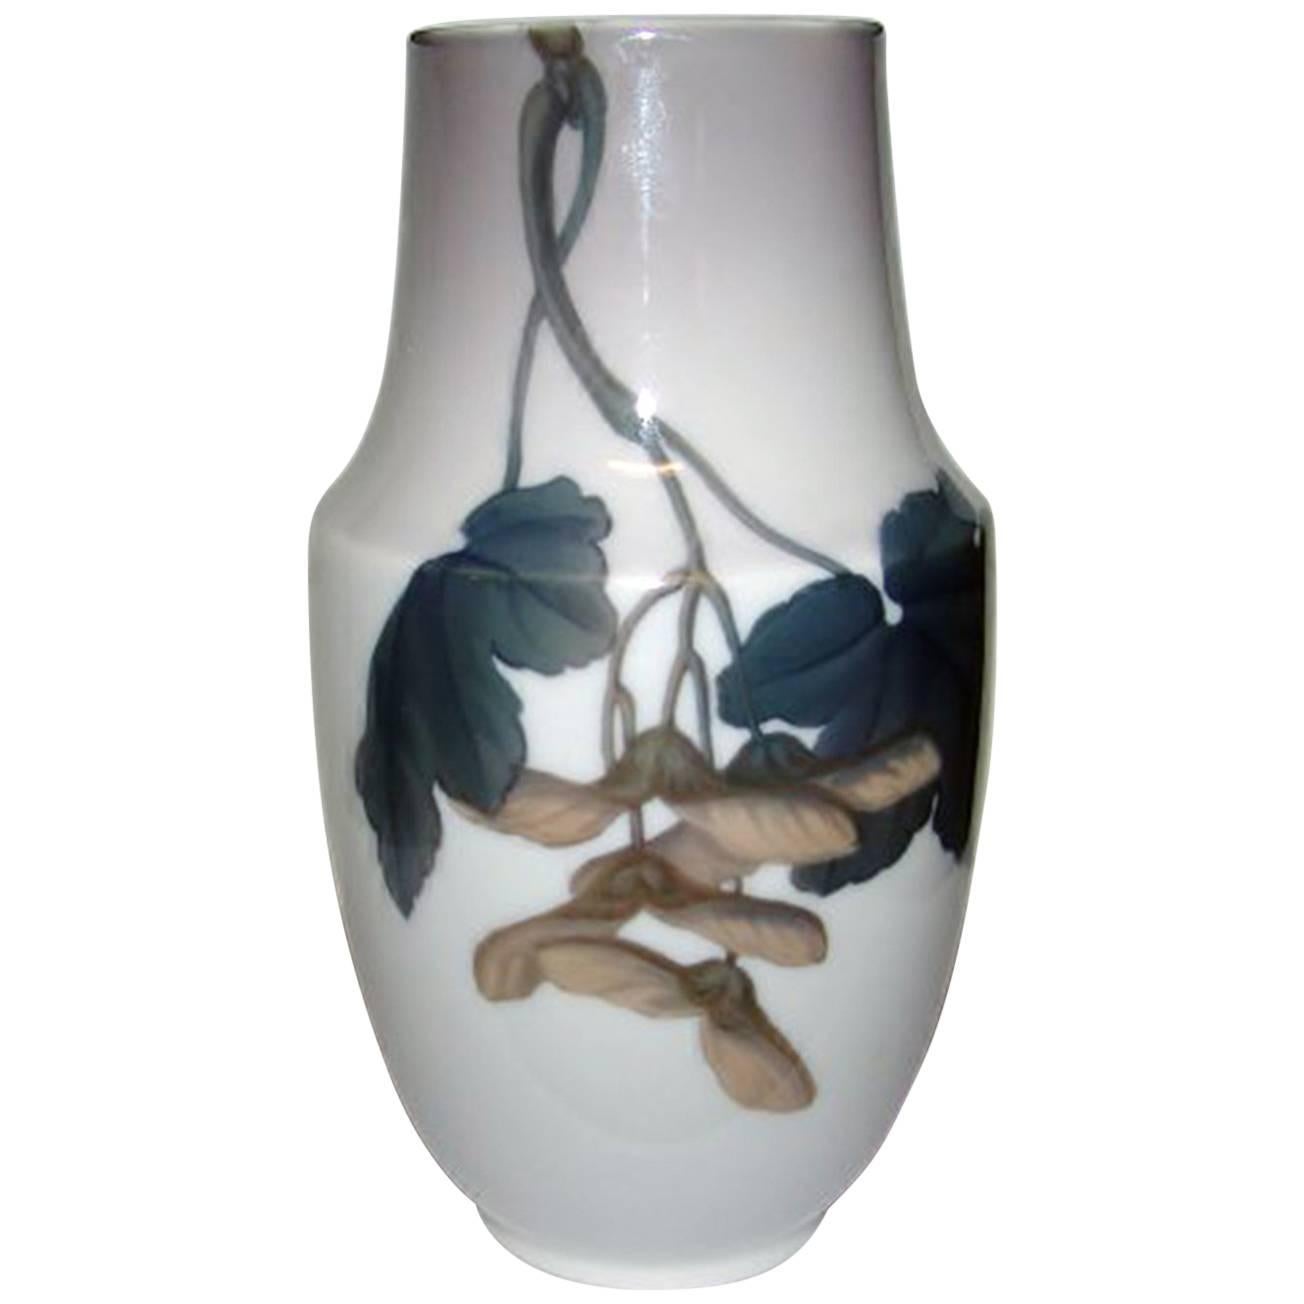 Bing & Grøndahl Art Nouveau Vase #7934/248 For Sale